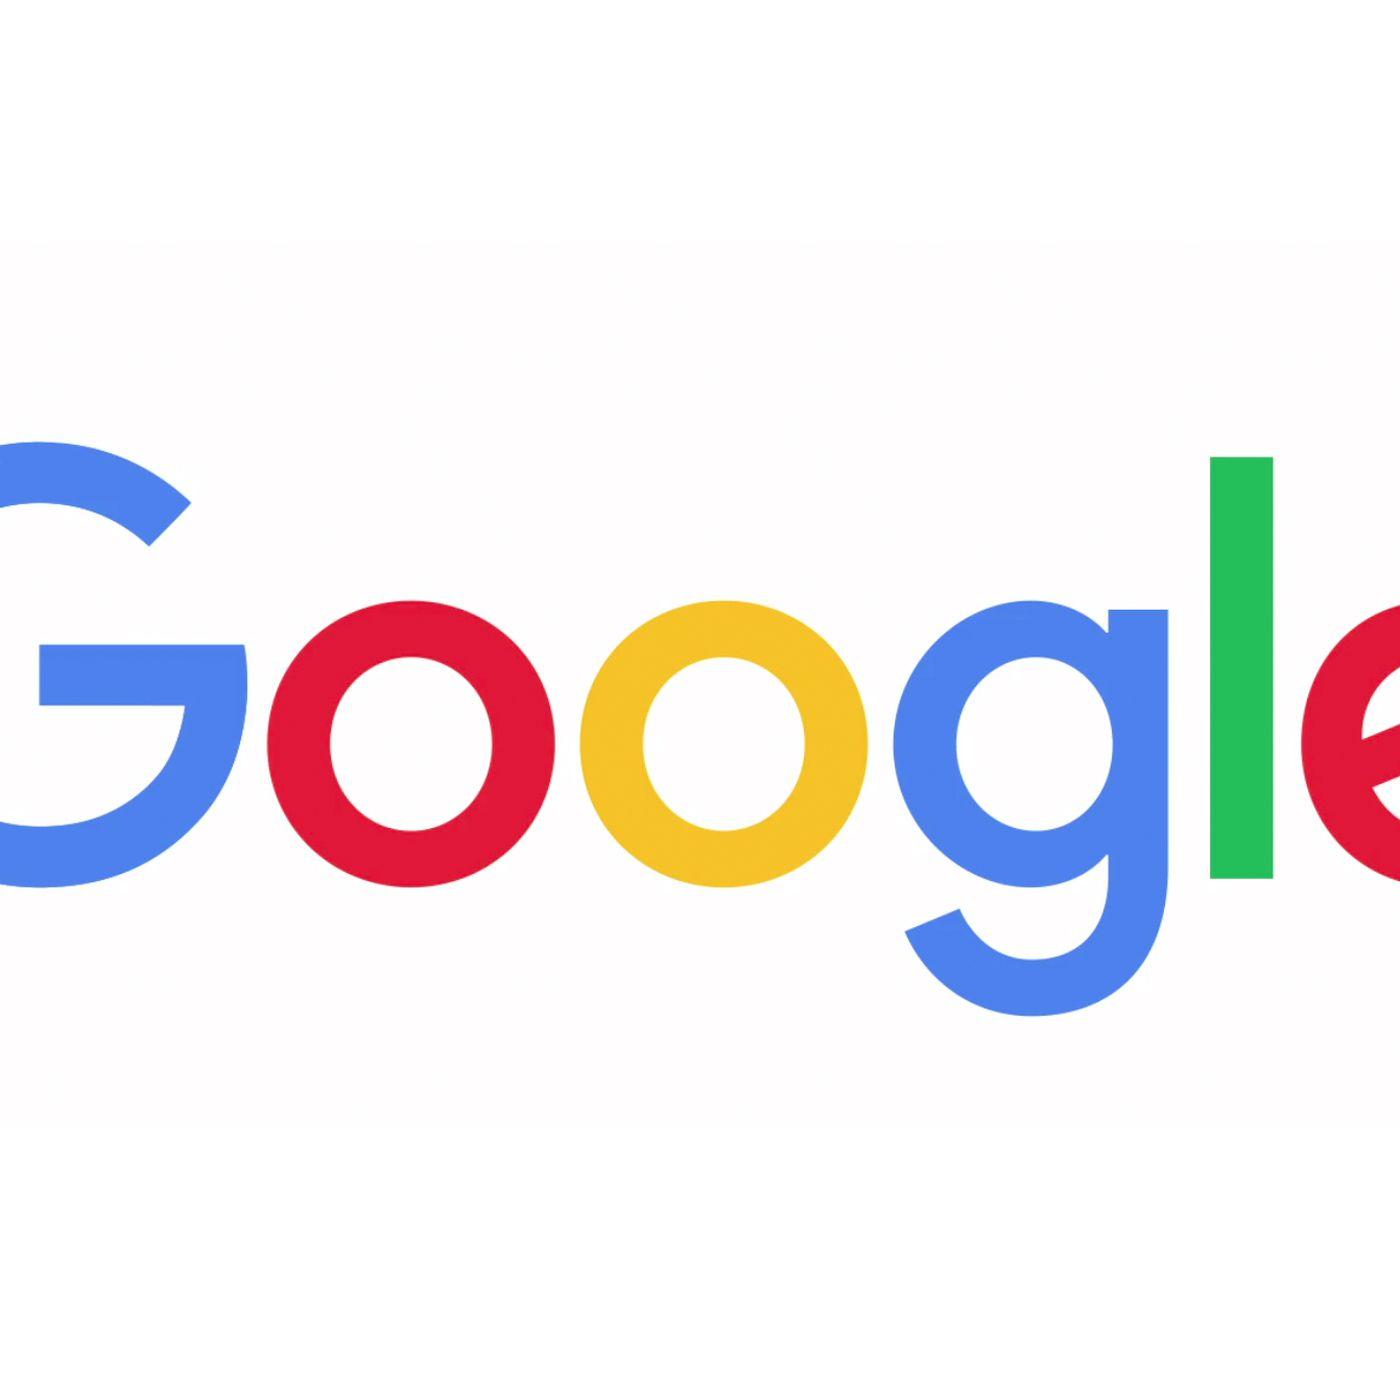 Oldest Google Logo - Google has a new logo - The Verge